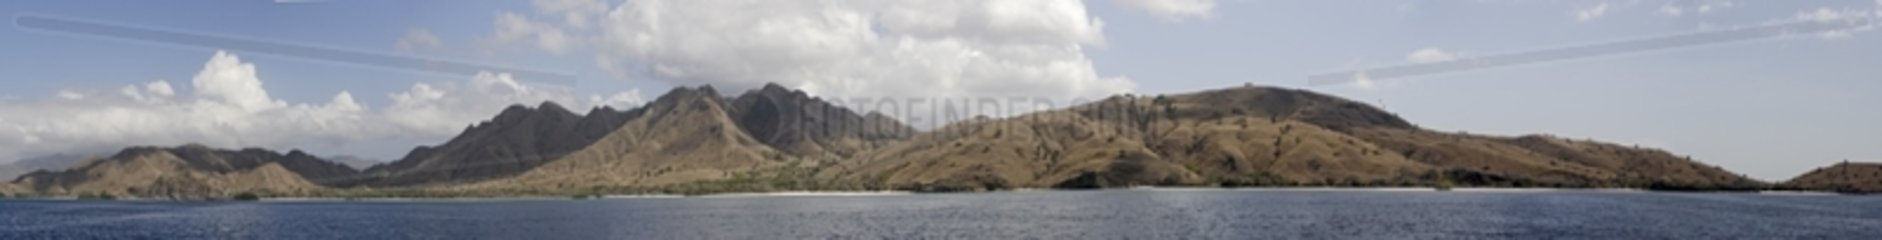 Insel Komodo Indonesien